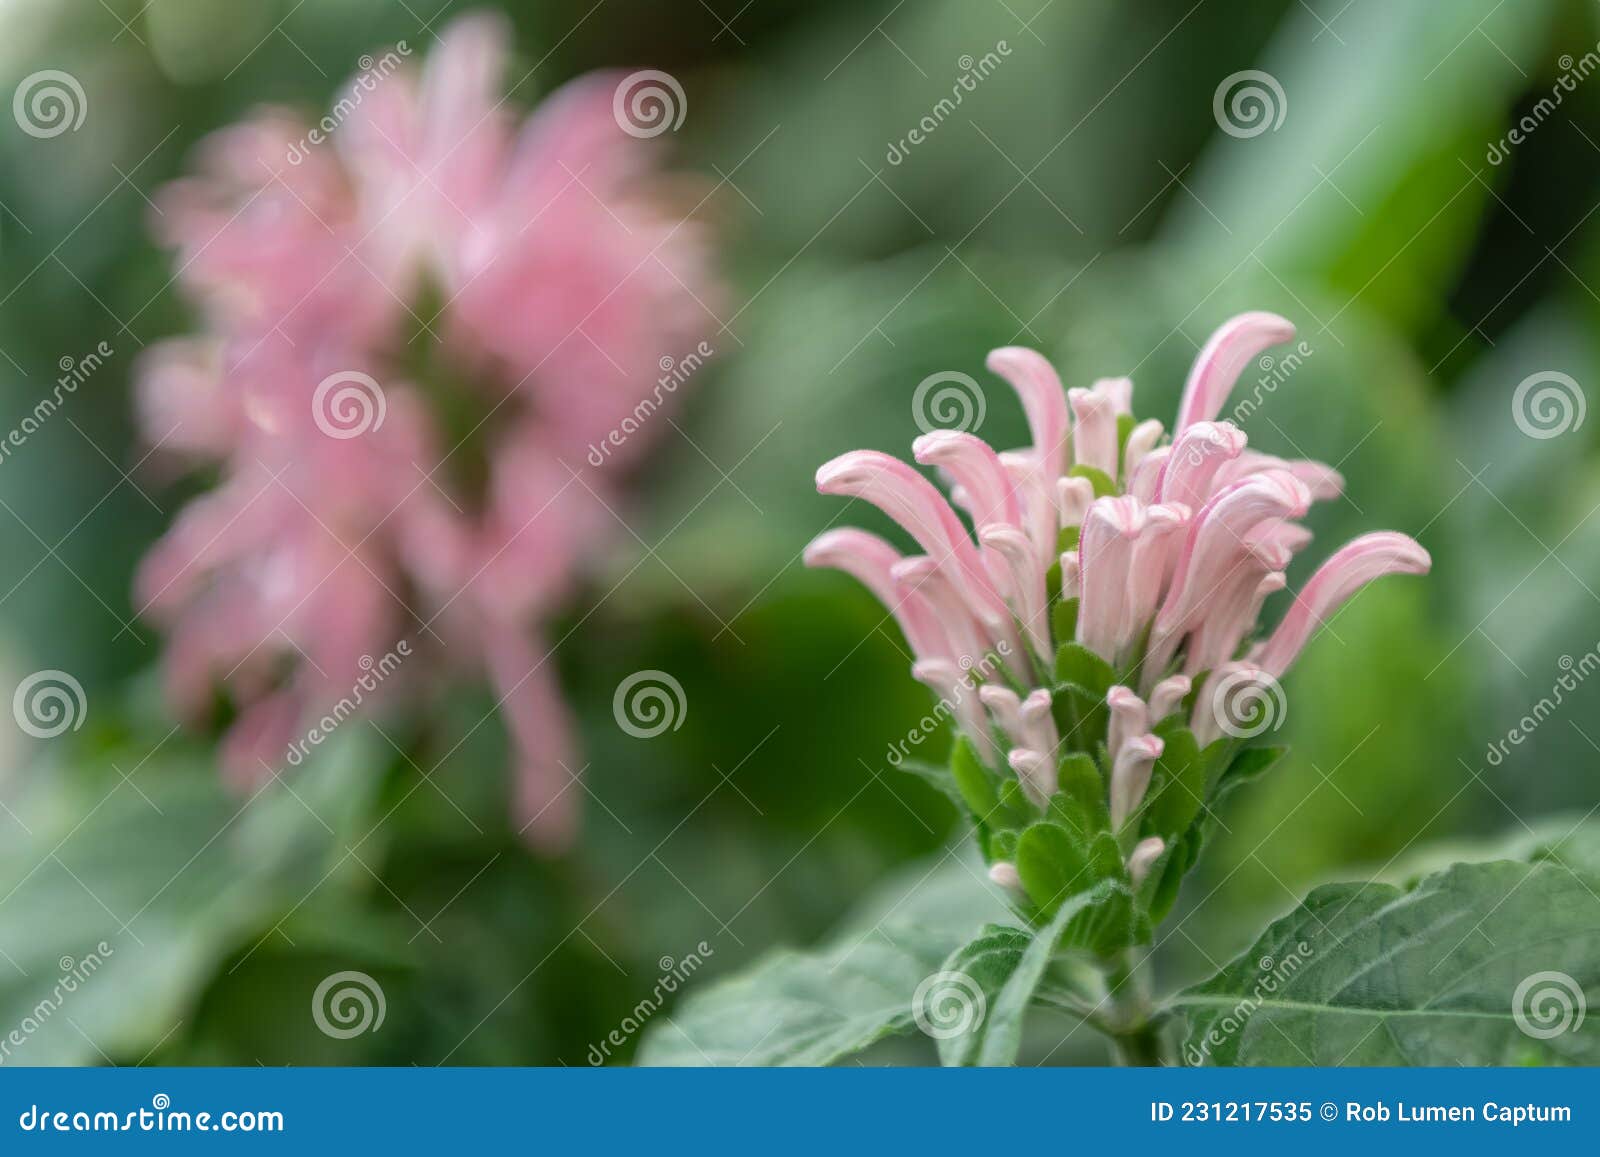 brazilian plume flower, justicia carnea, pinkish budding flower